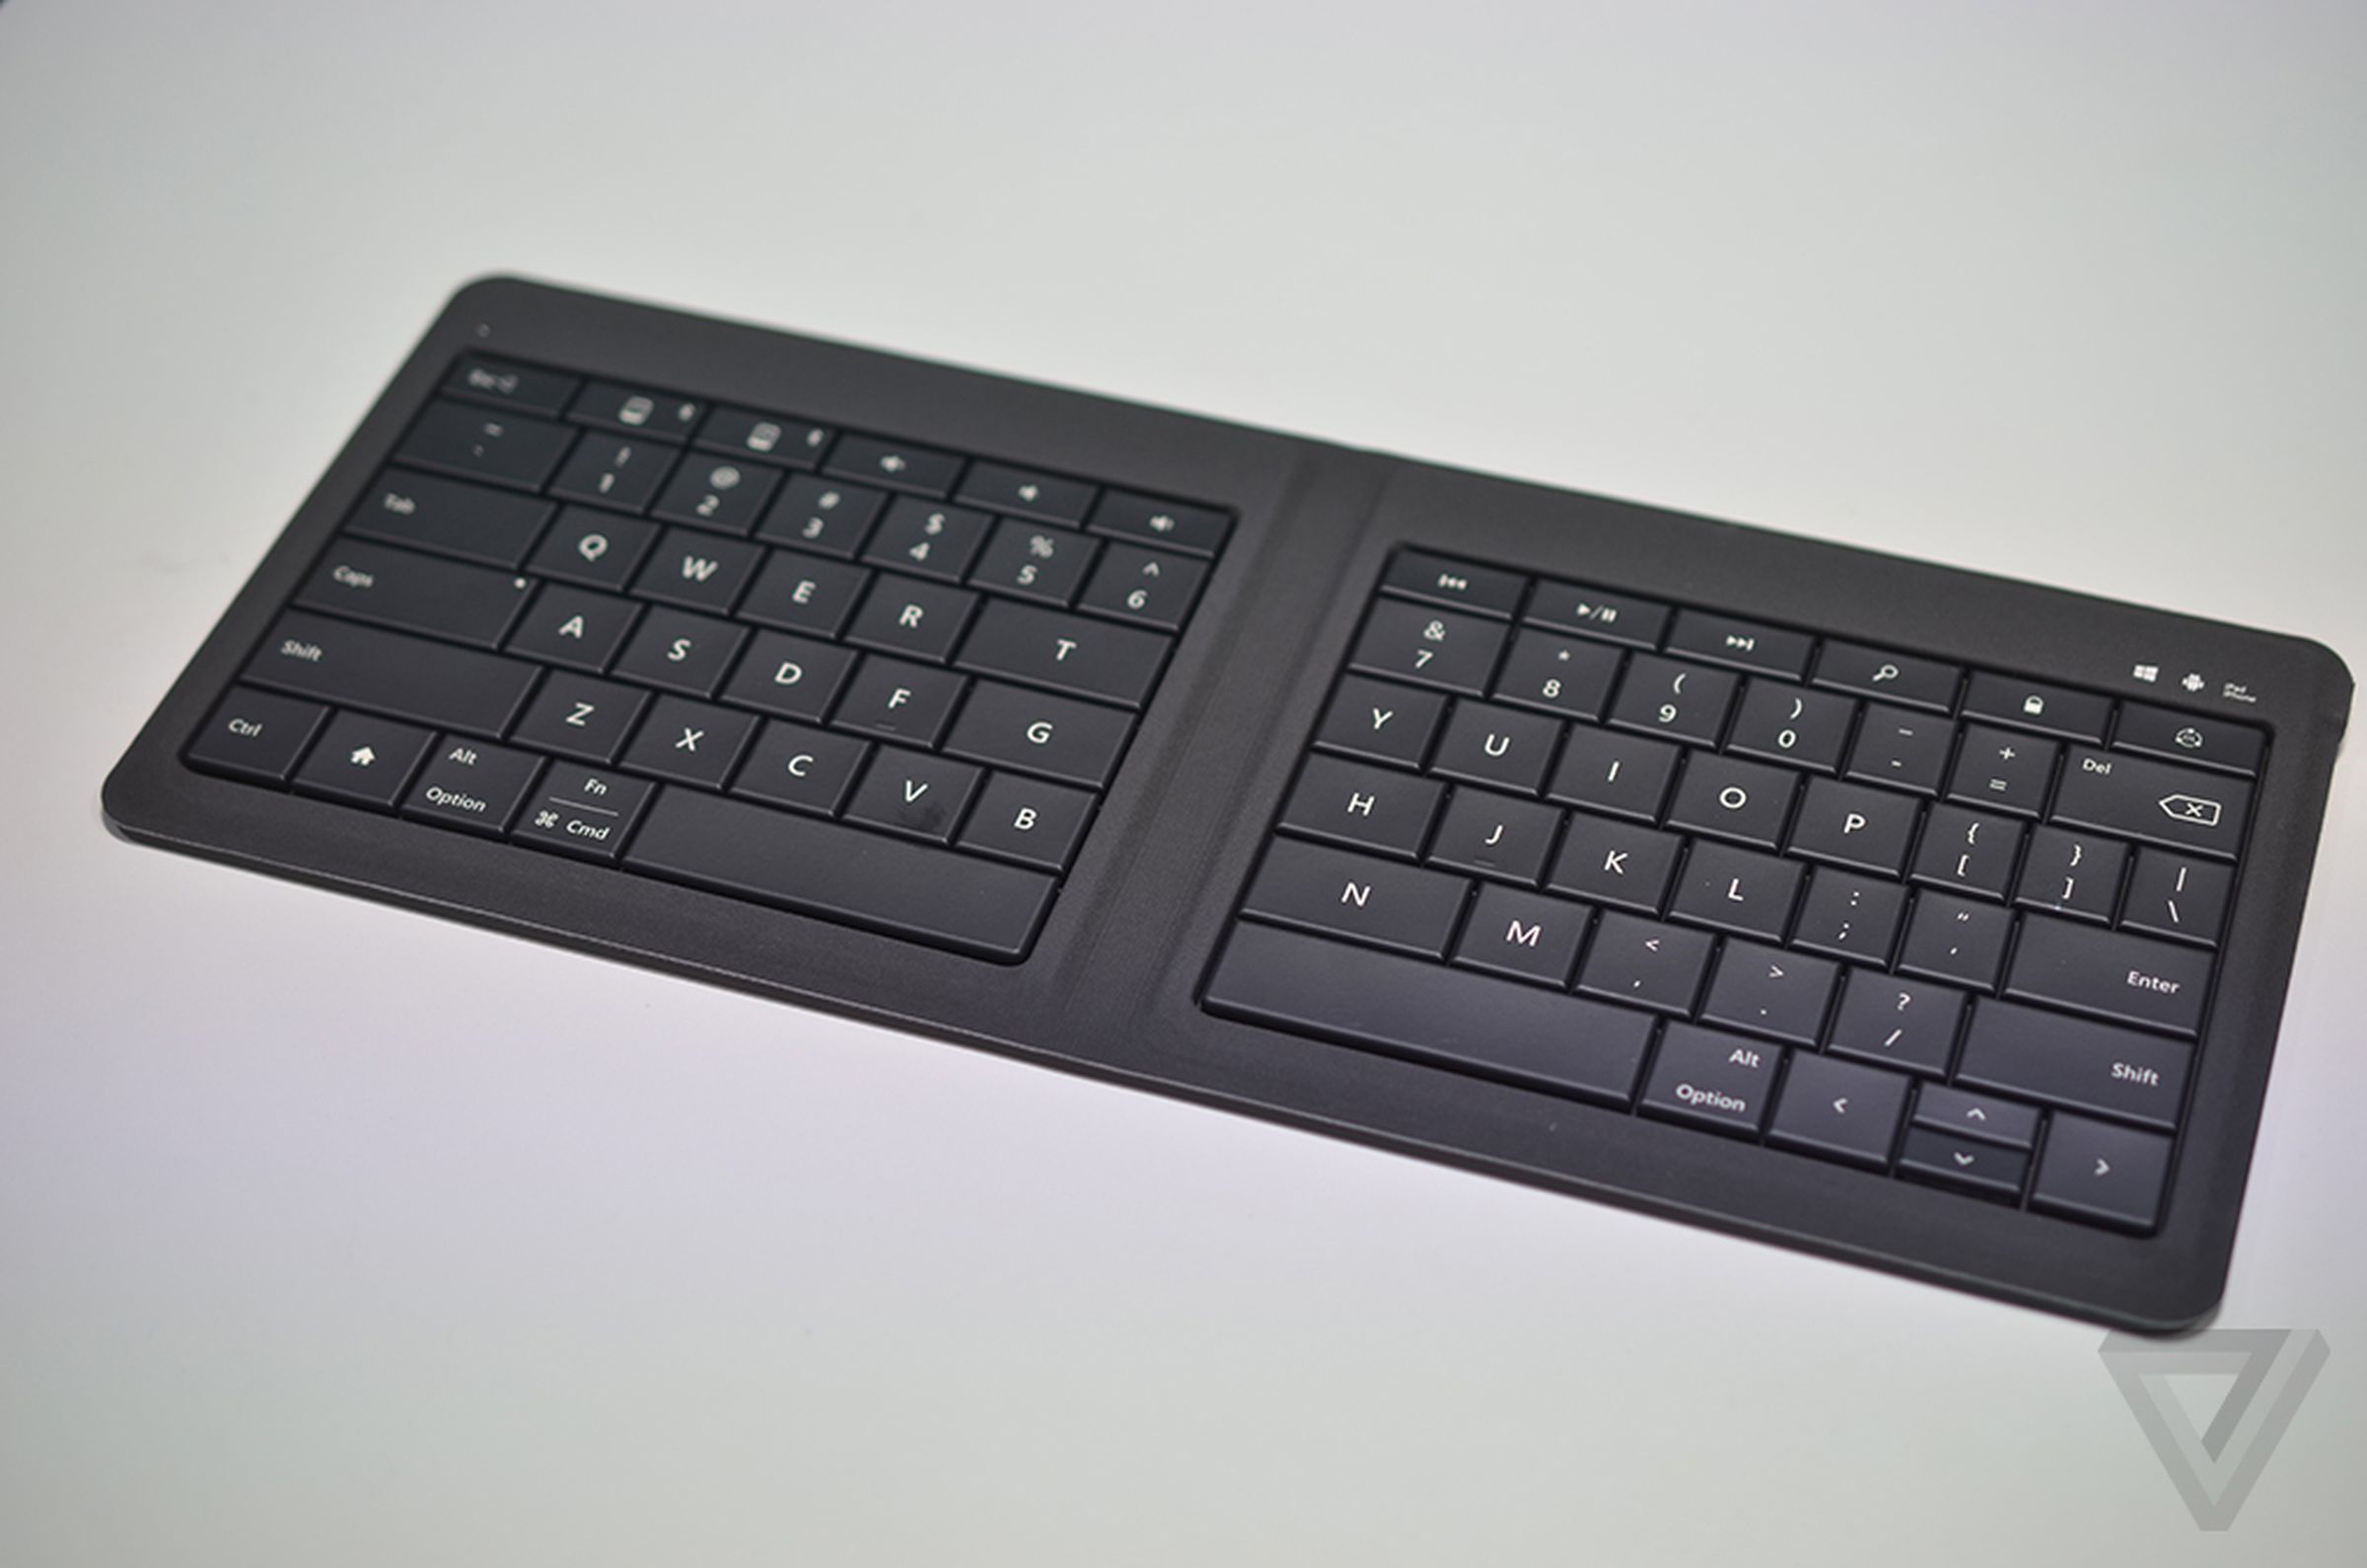 Microsoft Universal Foldable Keyboard hands-on photos